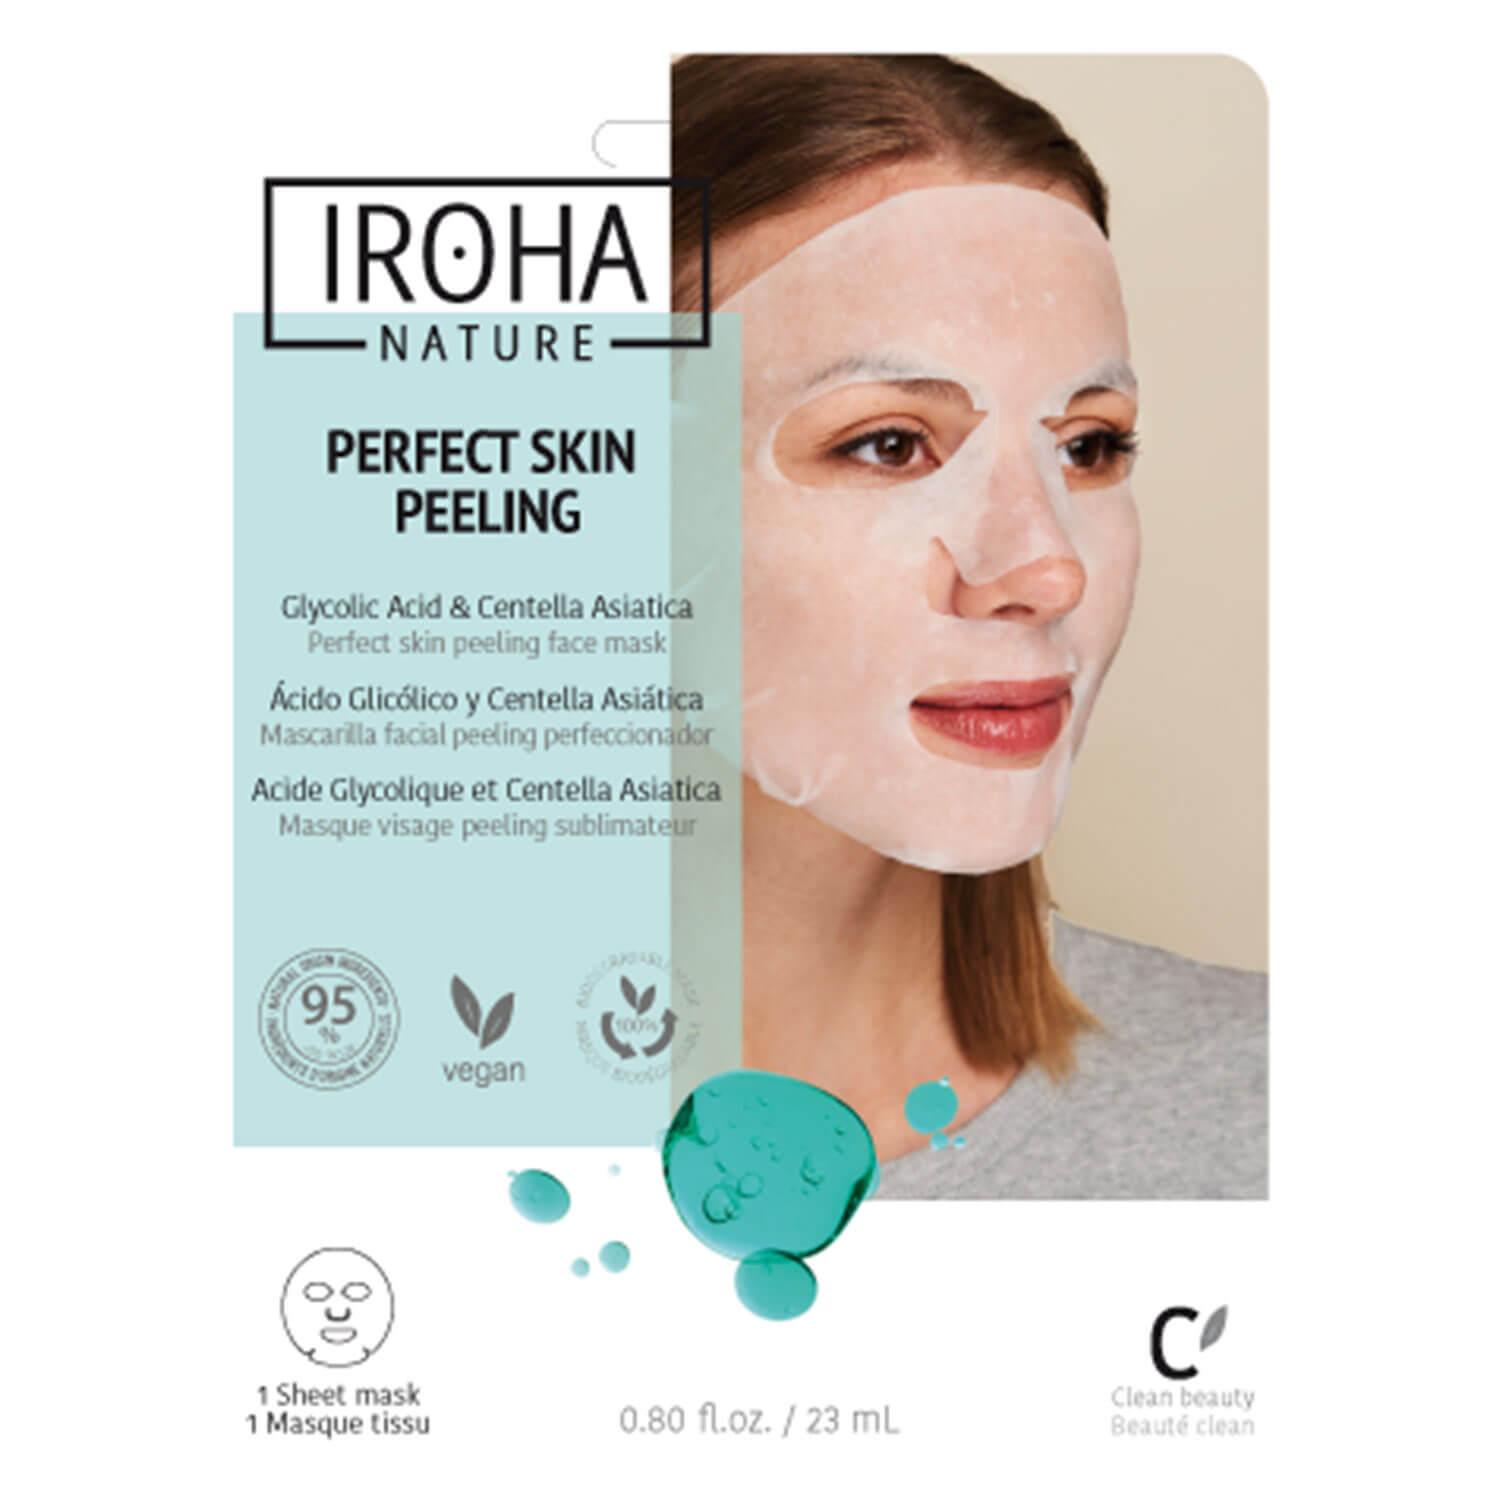 Iroha Nature - Perfect Skin Peeling Glycolic Acid & Centella Asiatica Face Mask